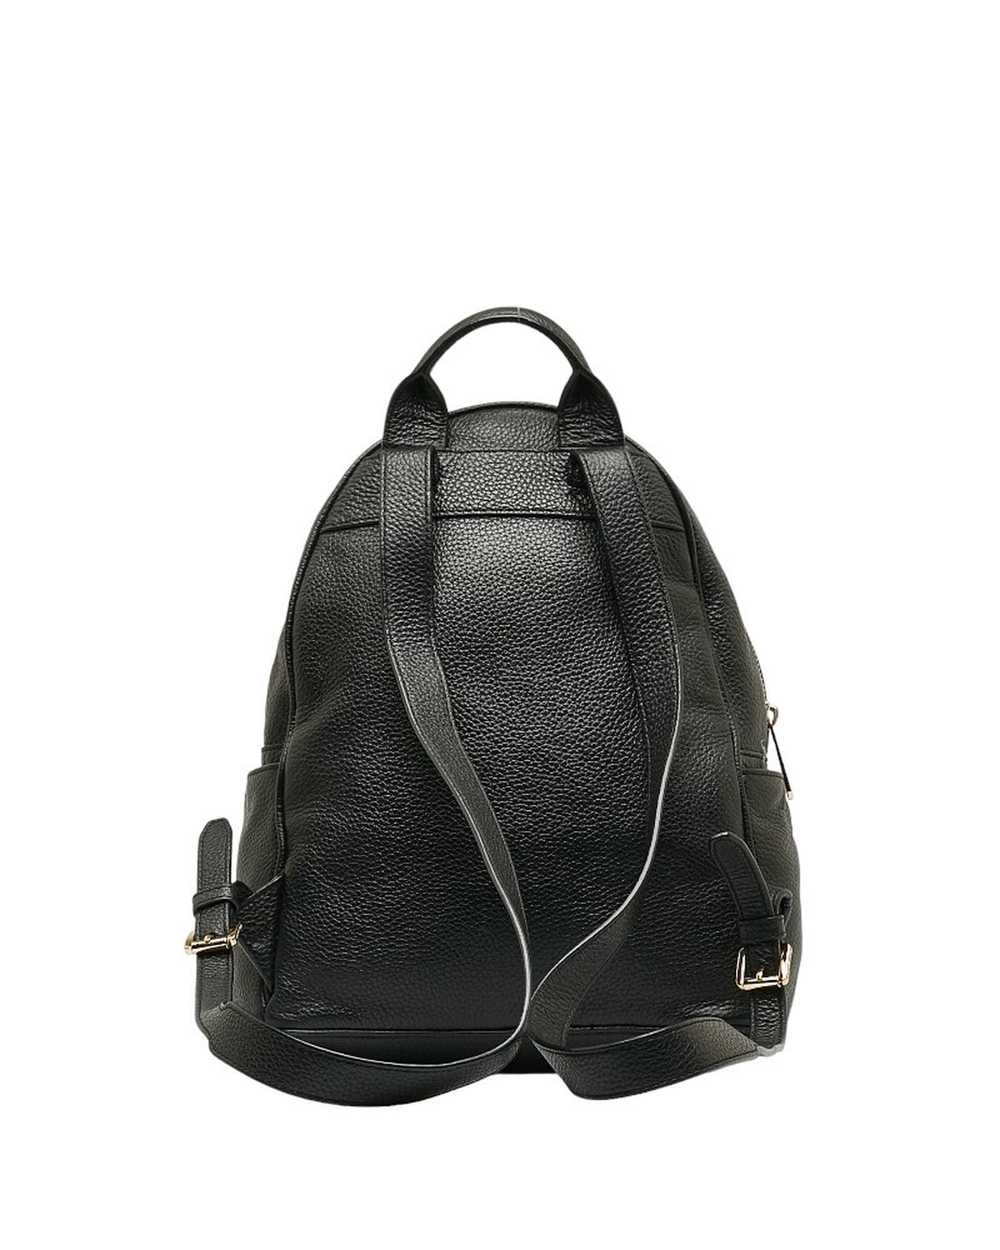 Michael Kors Studded Leather Abbey Backpack Bag - image 3